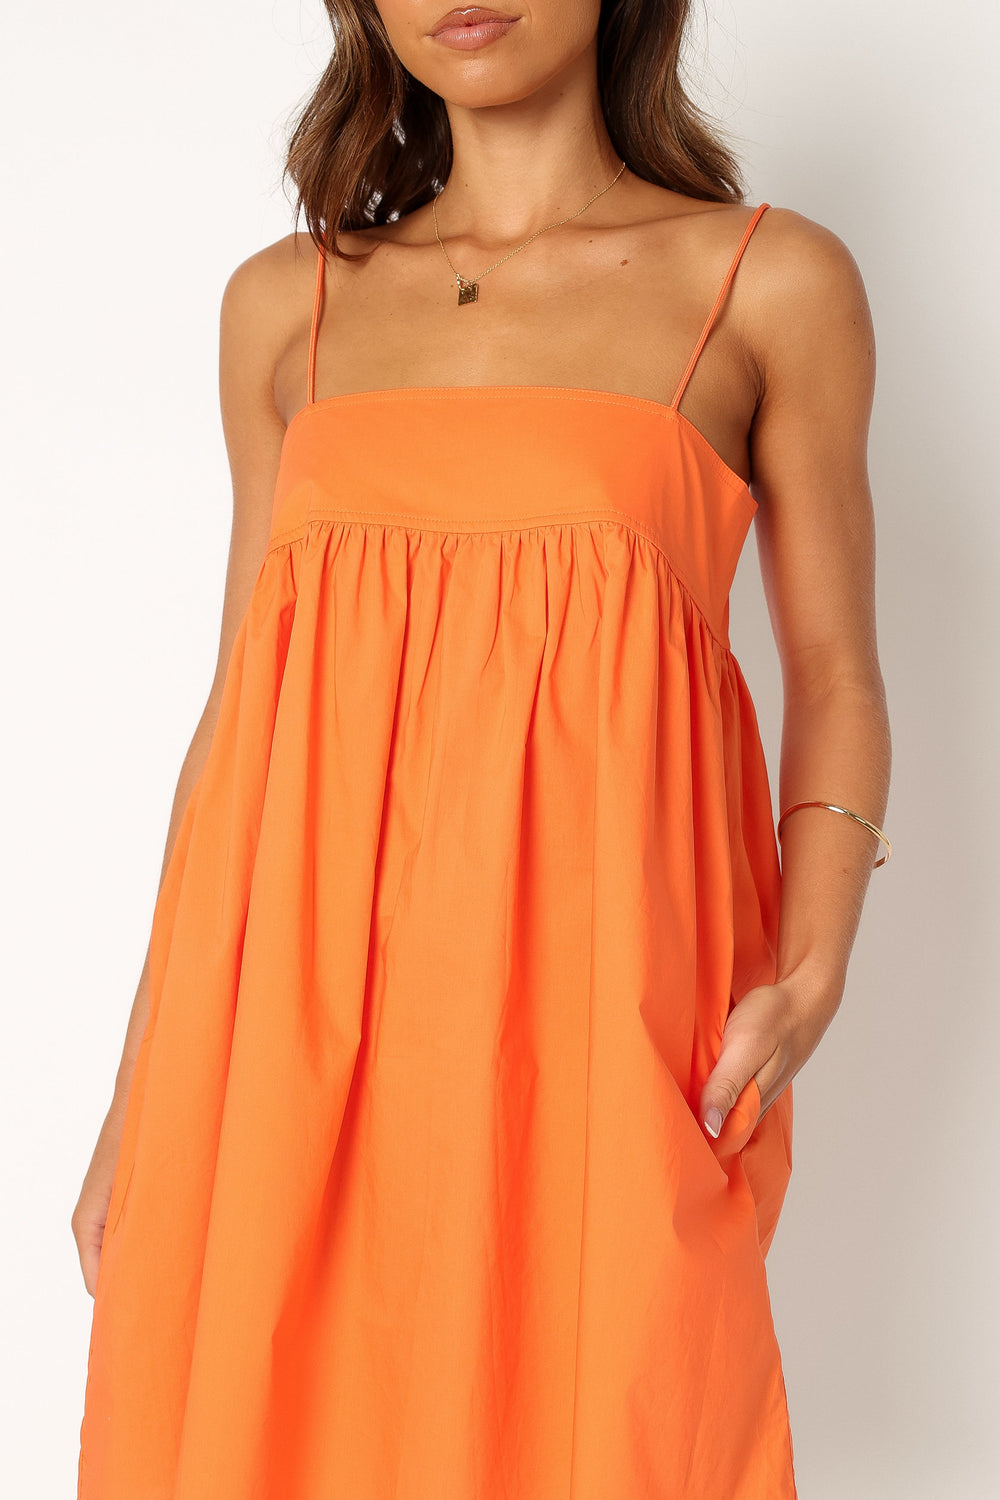 Petal and Pup USA DRESSES Serina Mini Dress - Orange